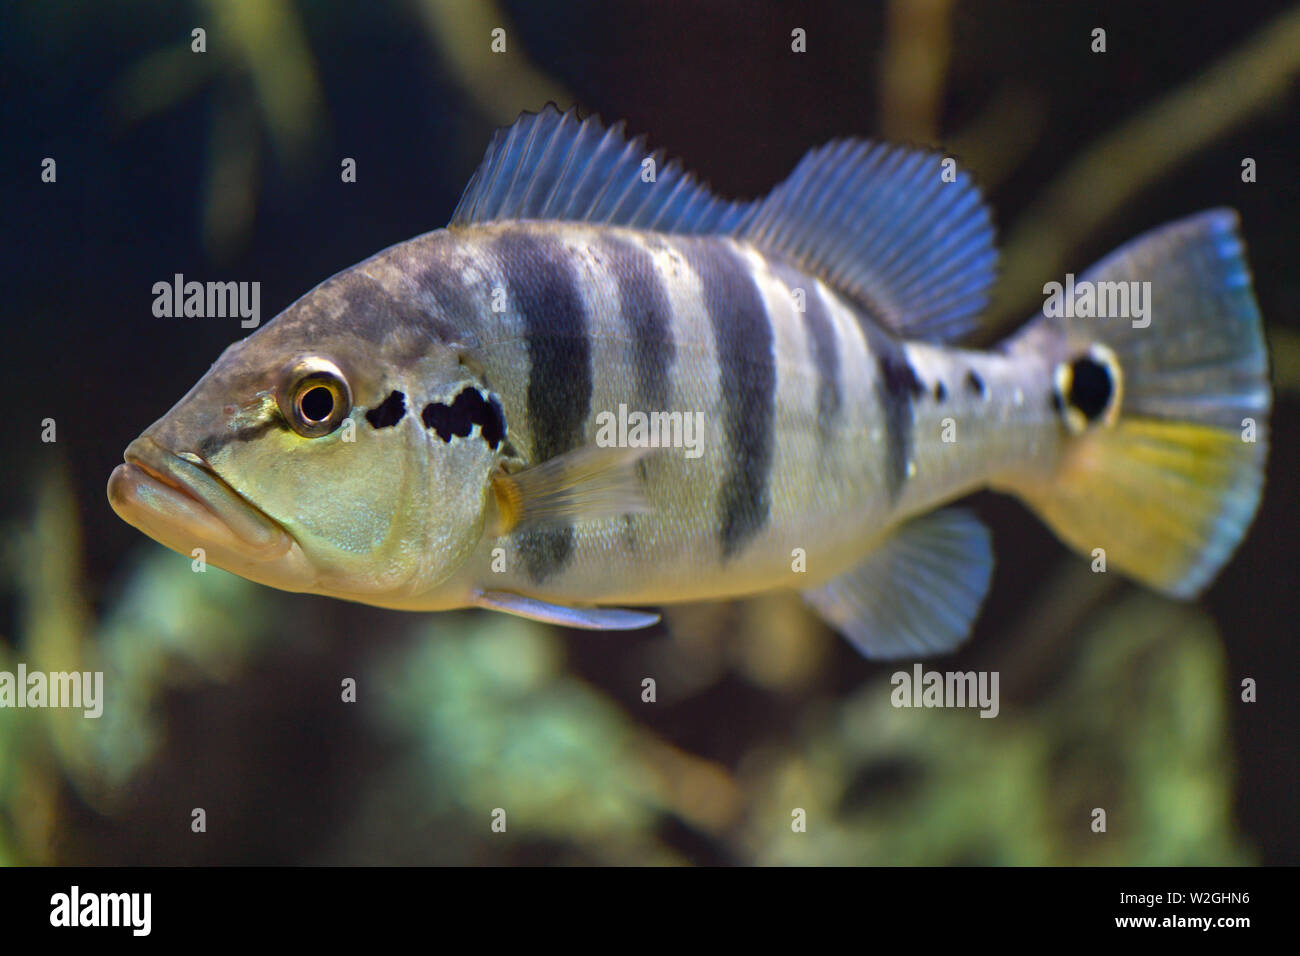 Big fish Cichla Azul  swims in a transparent aquarium. Horizontal photography Stock Photo